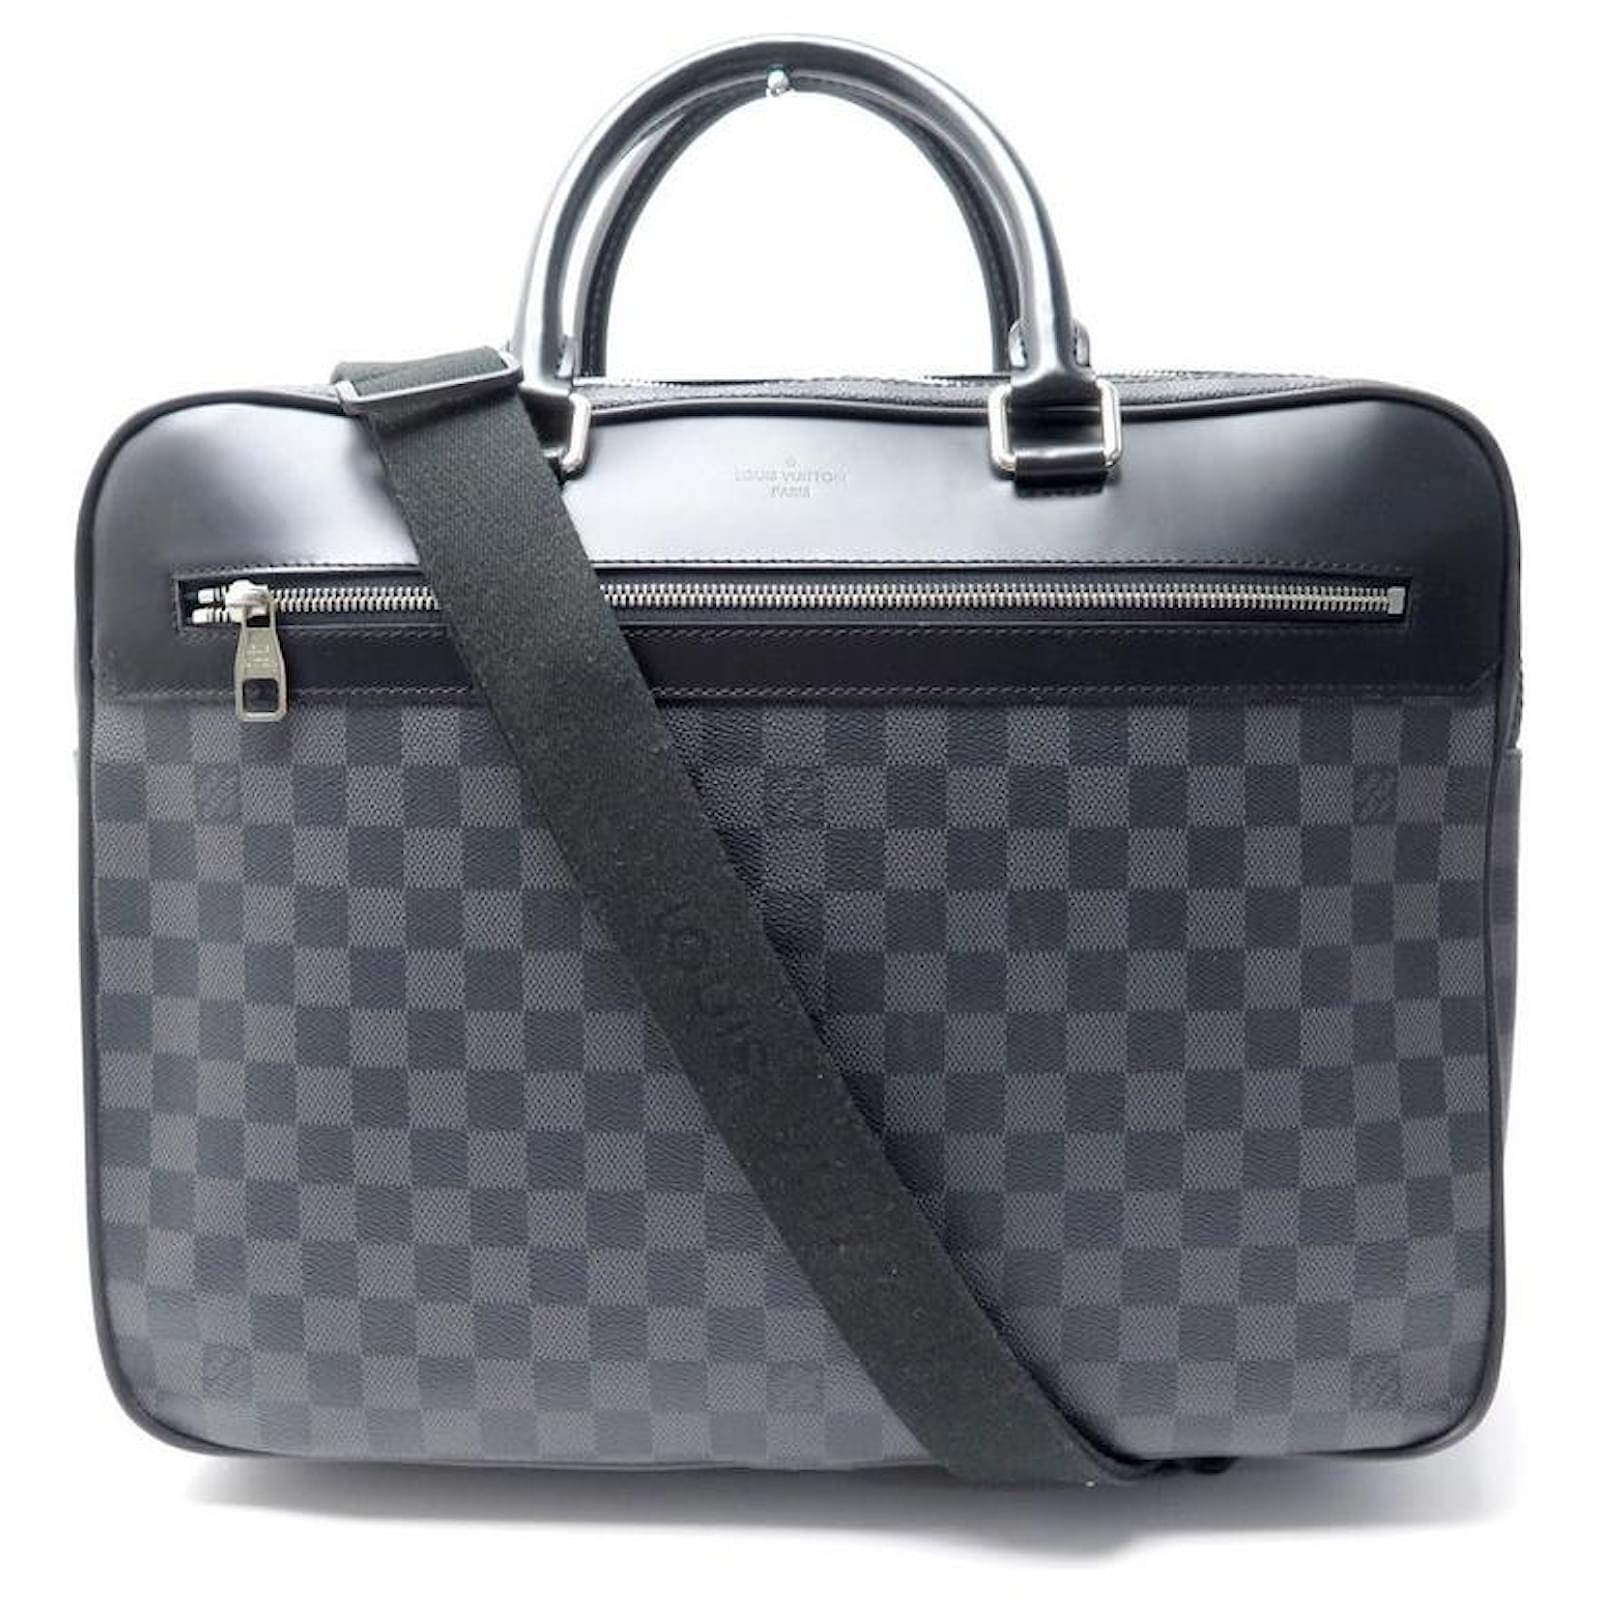 Louis Vuitton Keepall Bandoulière 55 Monogram Duffle Bag Review - Annie  Fairfax | Louis vuitton duffle bag, Bags, Monogrammed duffle bag